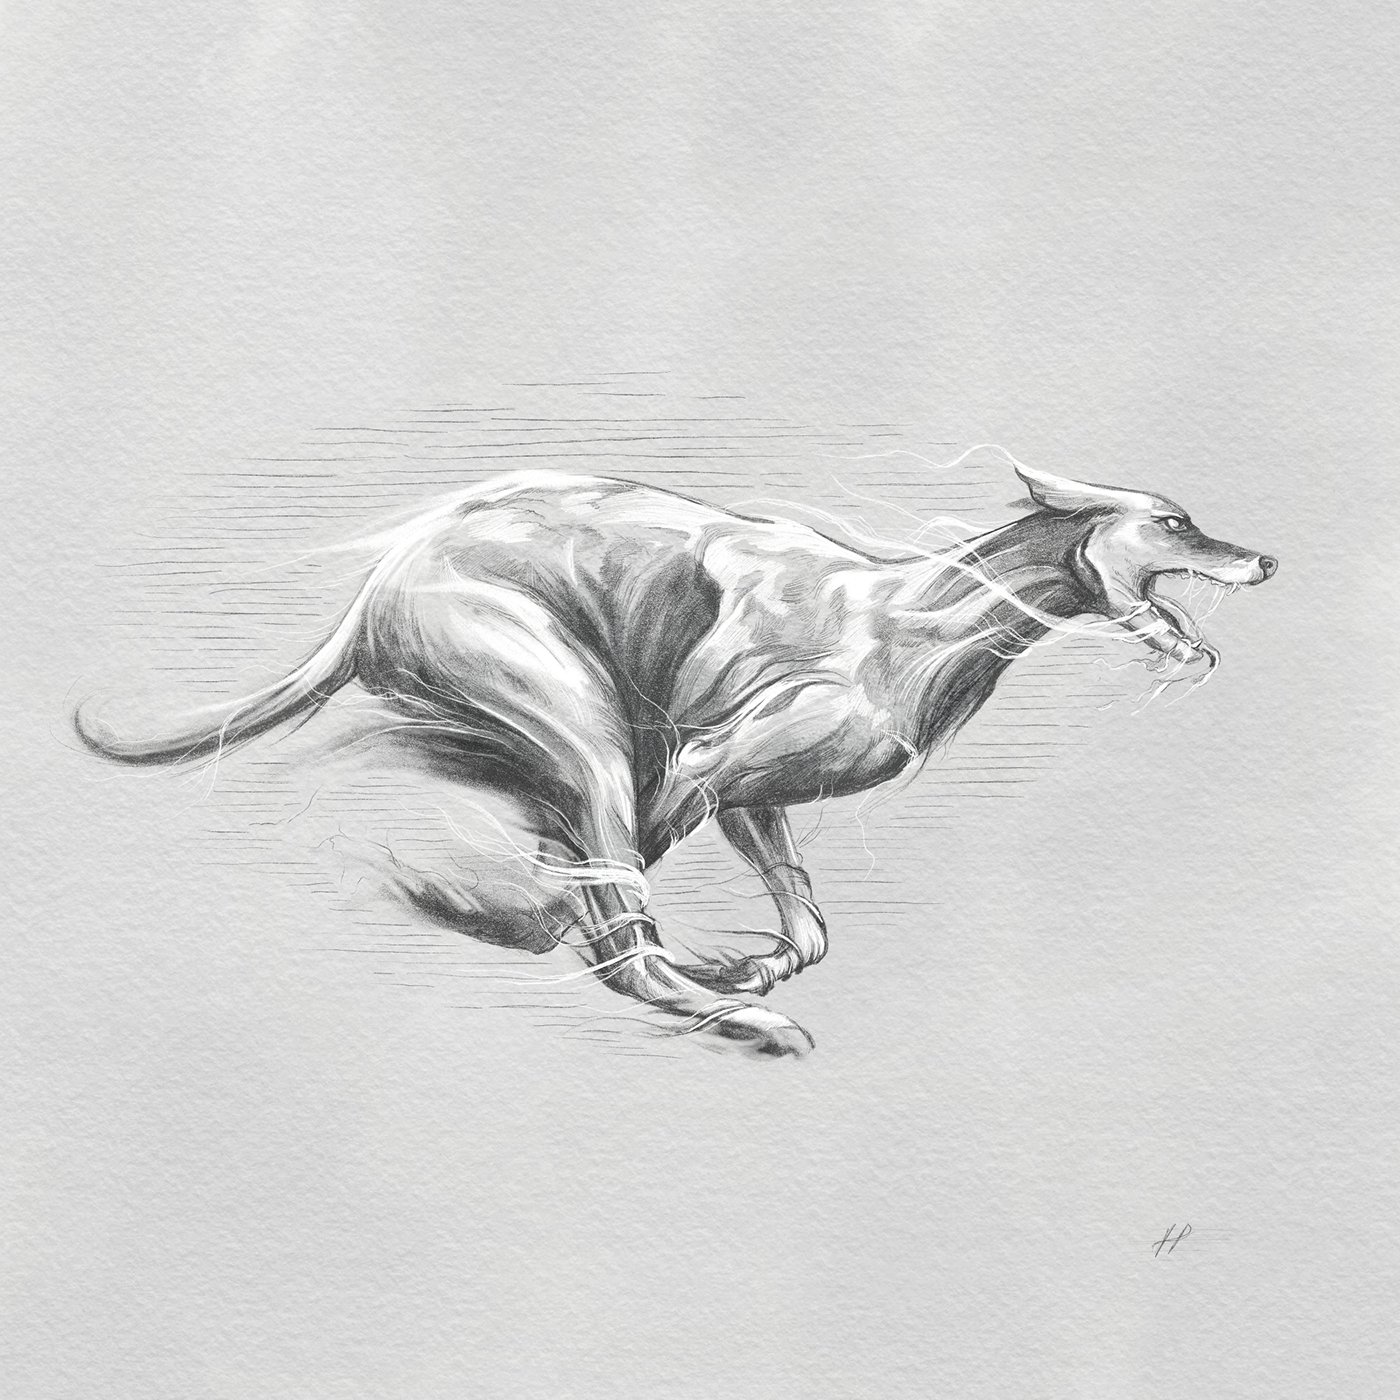 kyle webster derik hobbs SCAD dogs wildlife greyhounds running exercise animals